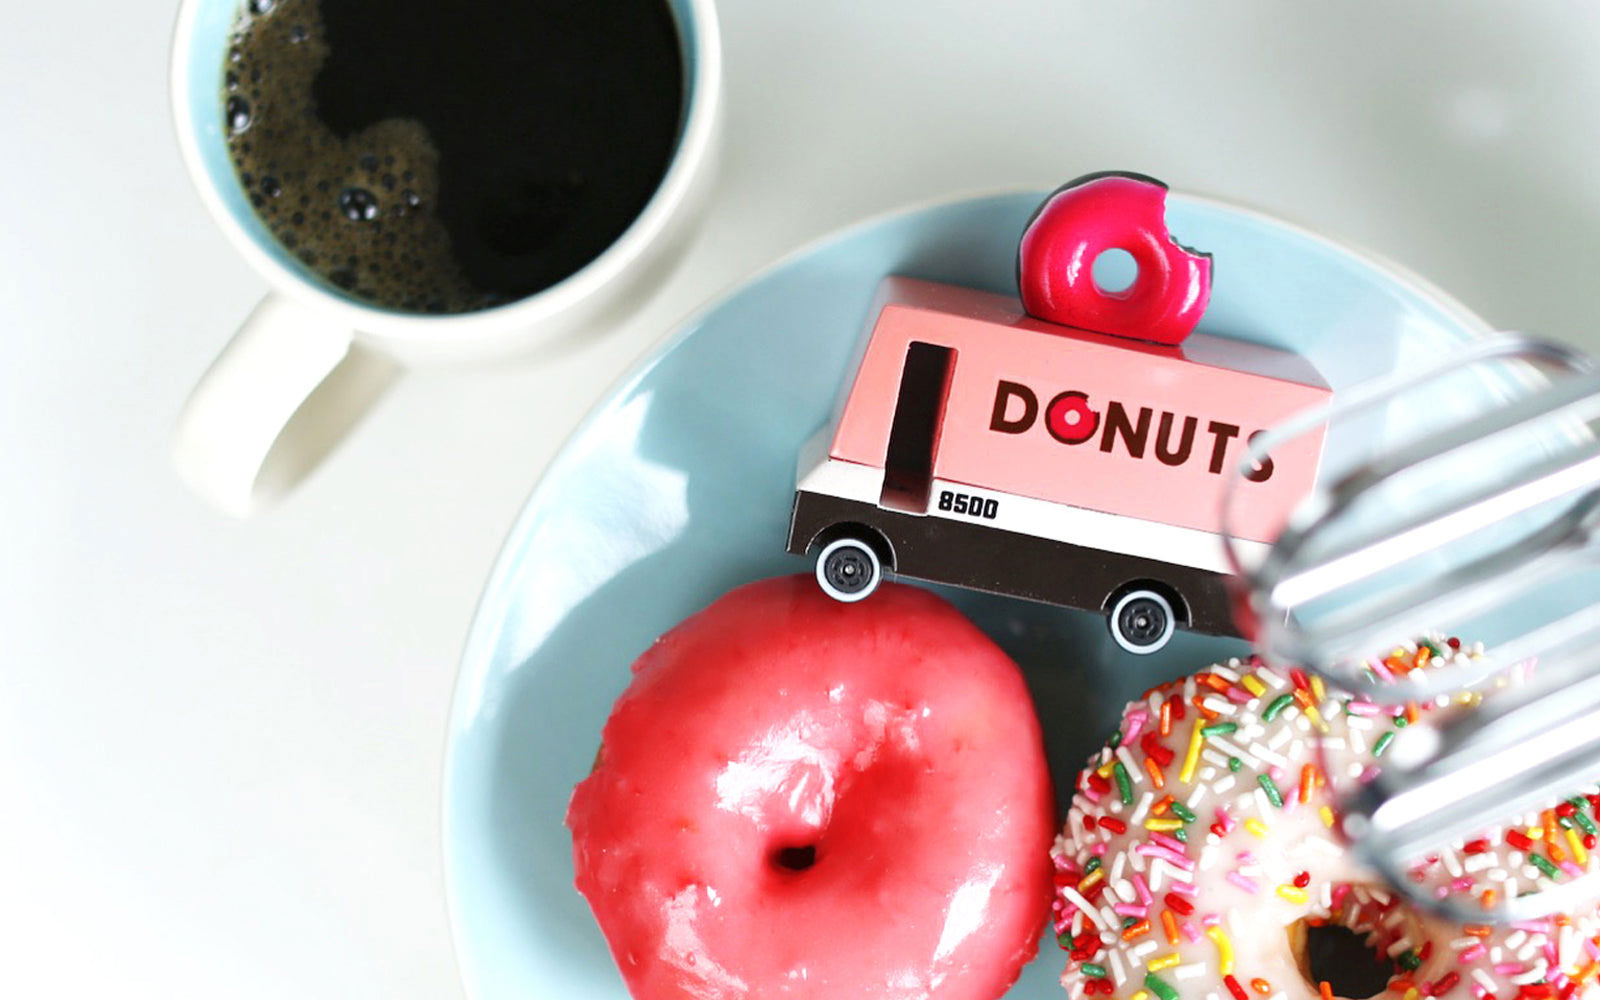 Donut Truck CandyCar - Candylab